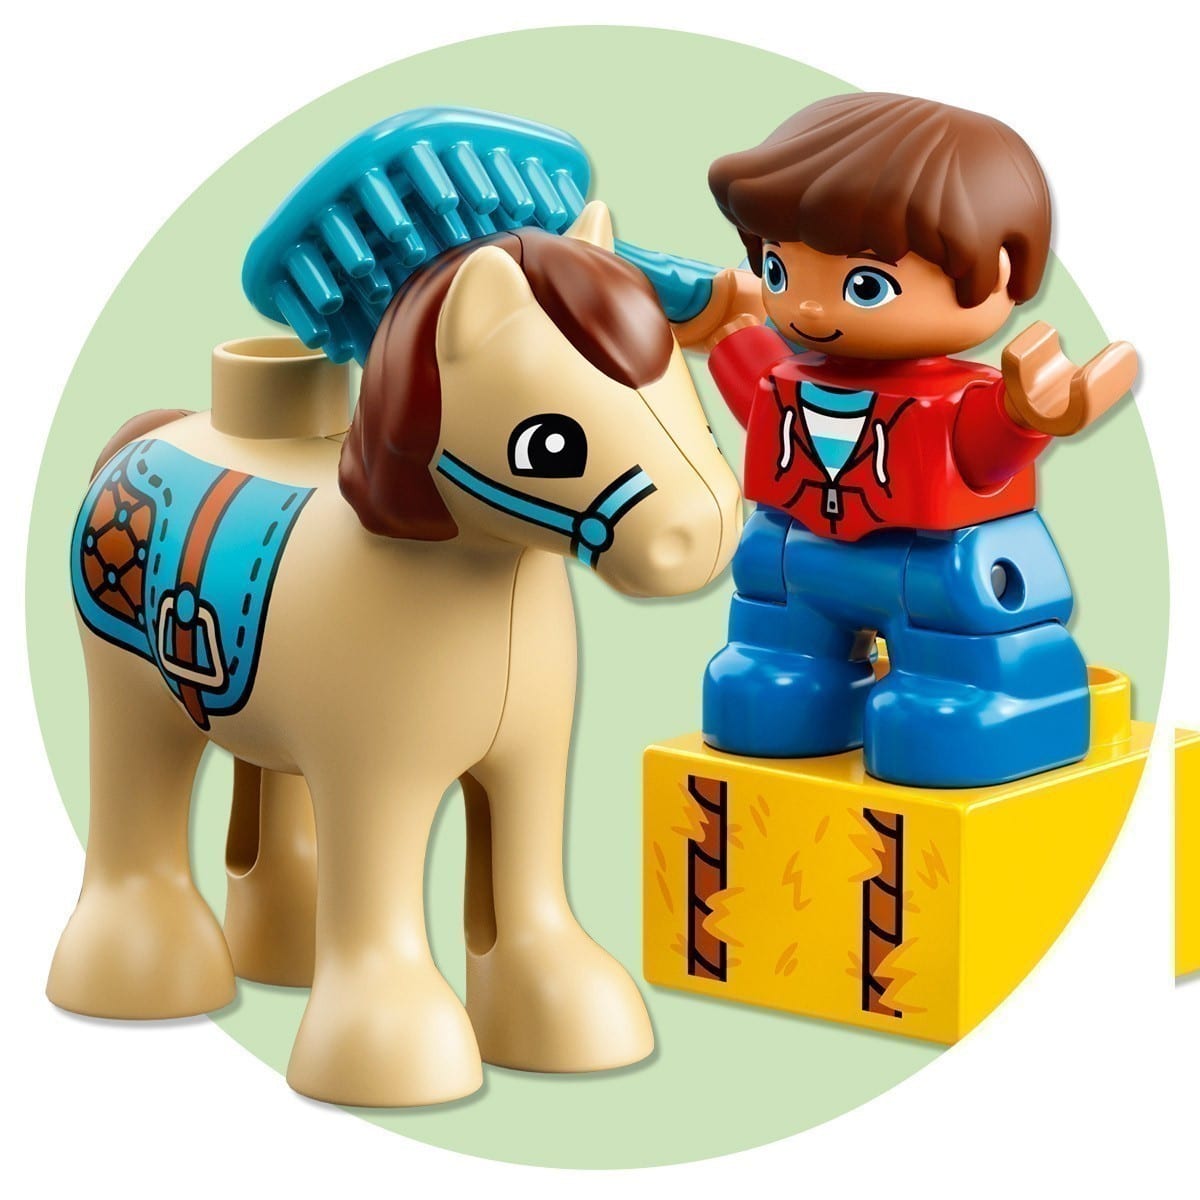 LEGO® DUPLO® 10868 - Farm Pony Stable